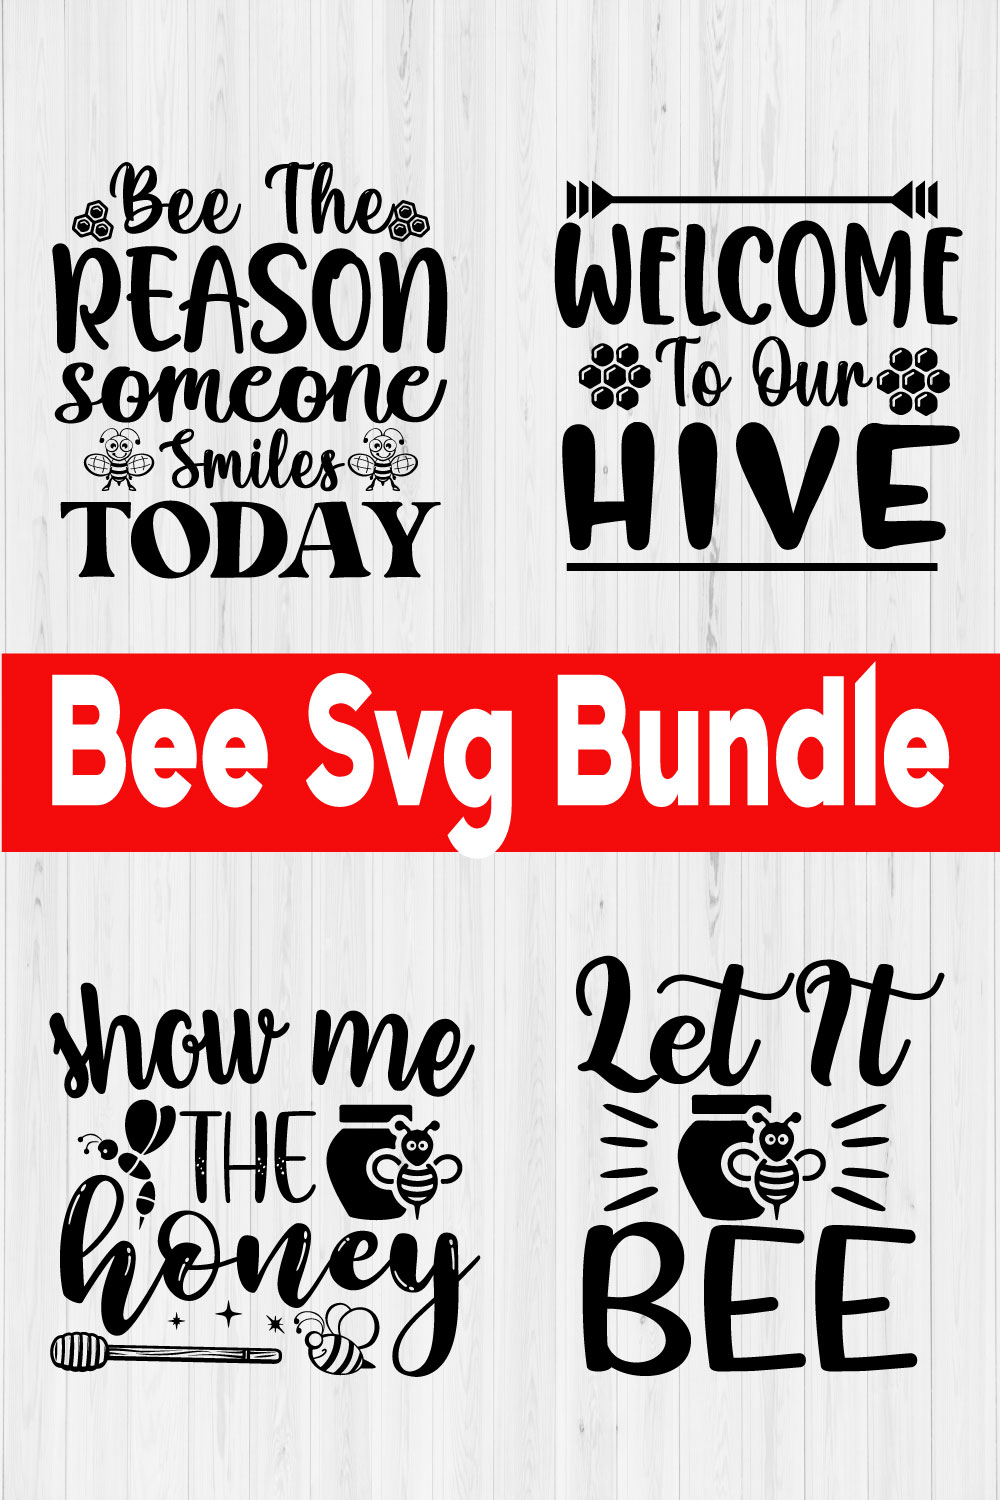 Bee Svg Quotes Bundle Vol3 pinterest preview image.